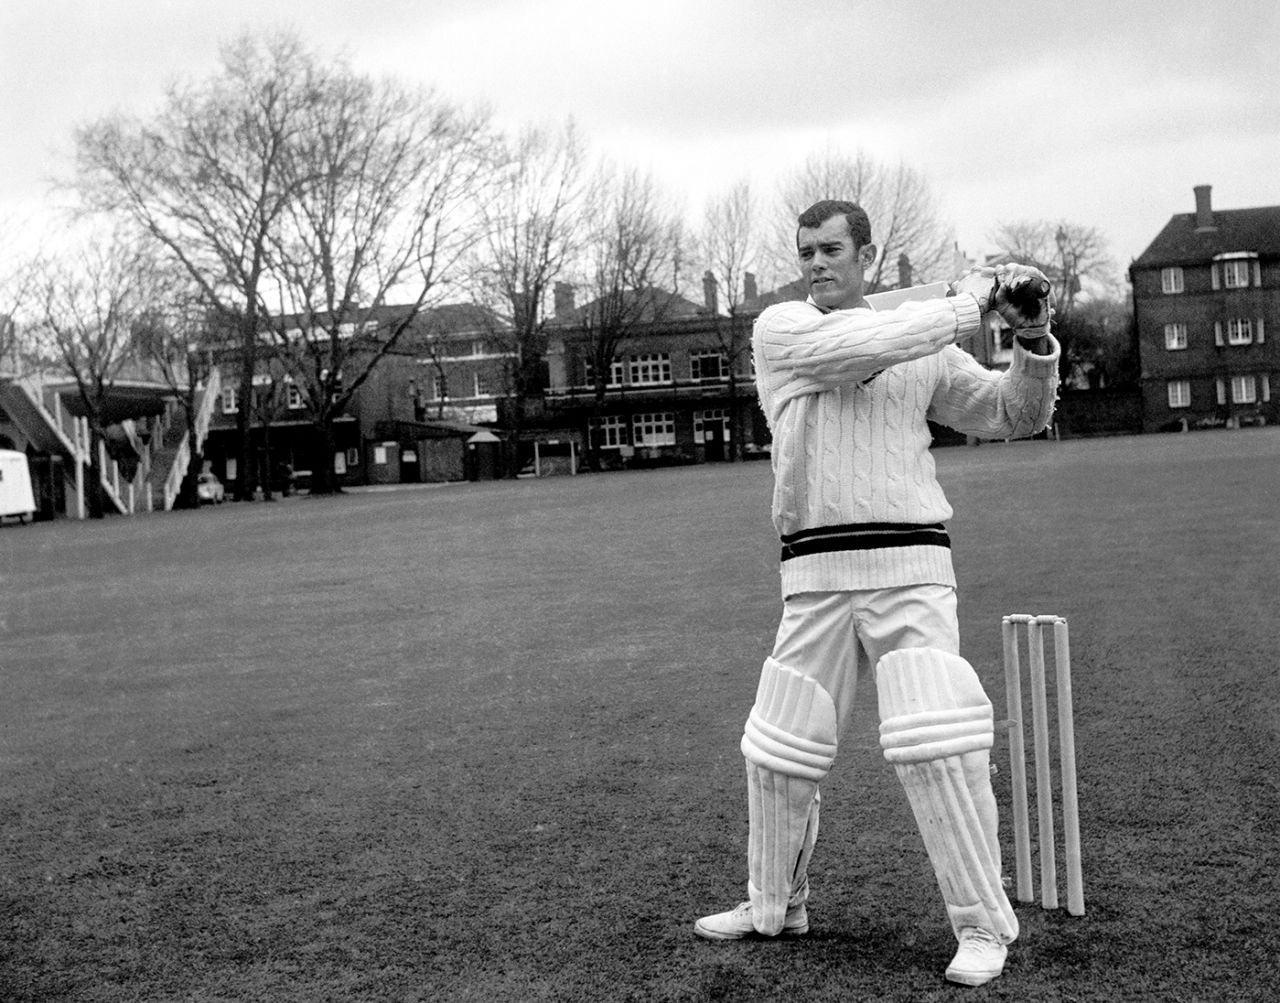 Charlie Davis strikes a batting pose, April 24, 1969